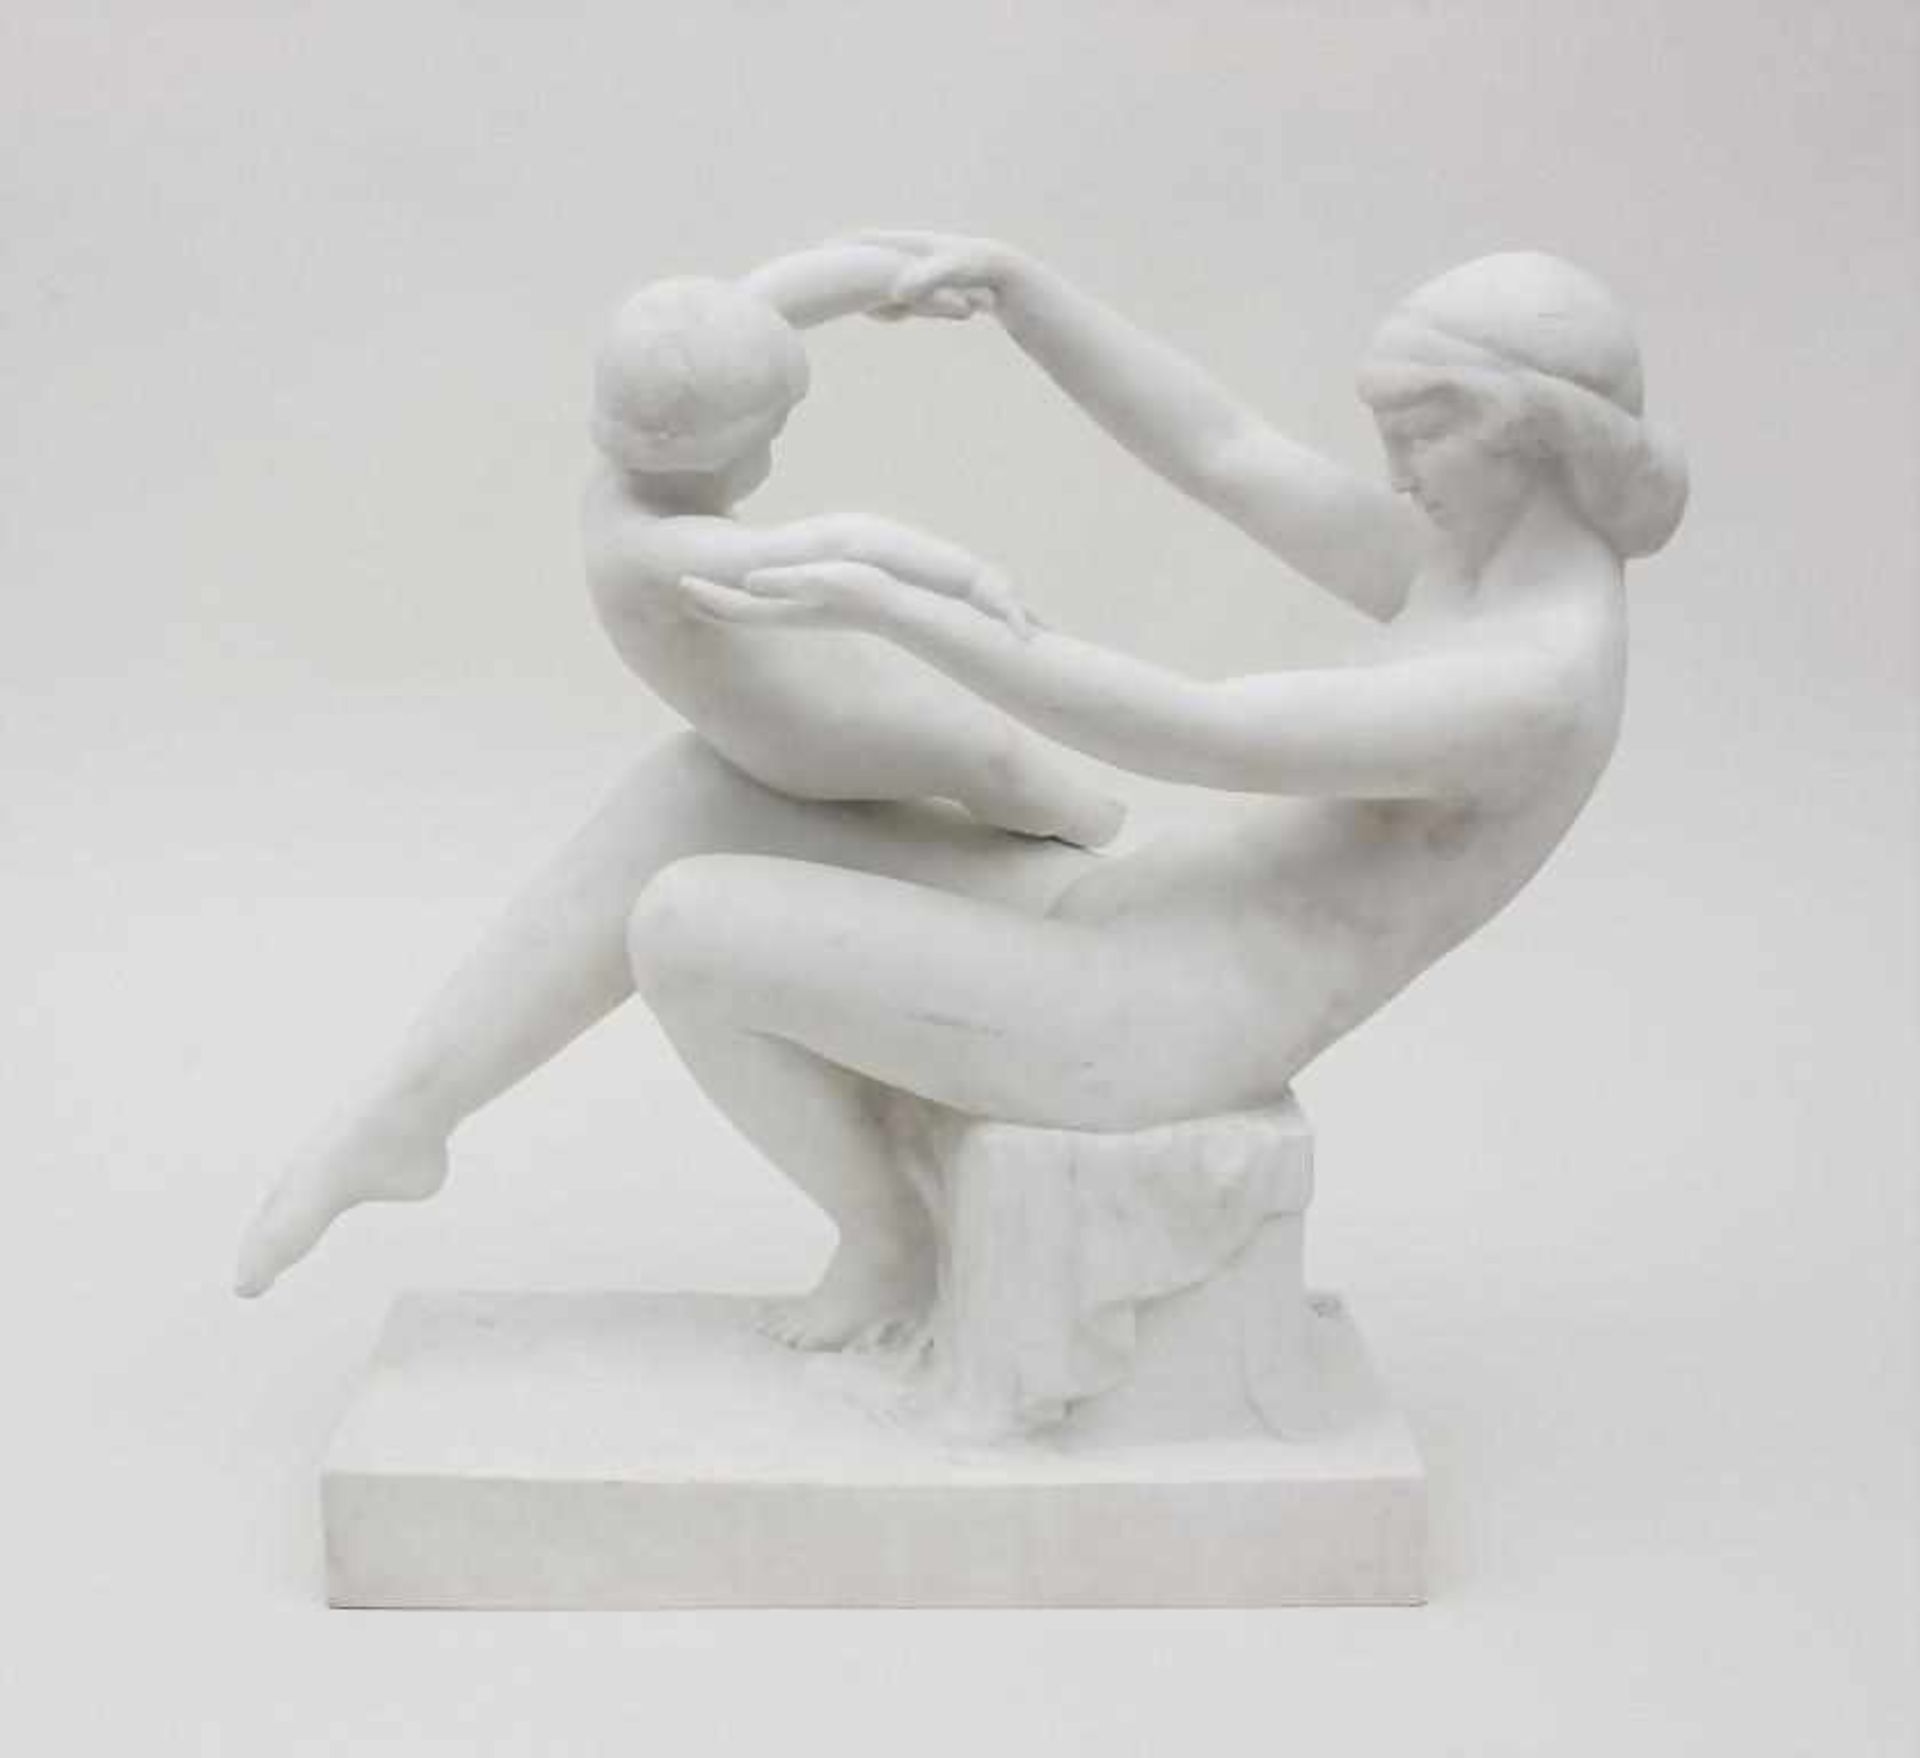 Porzellan Figur ' Mutterliebe' / Porcelain Figurine ' Motherly Love', Gaston Contesse 1870-1846,